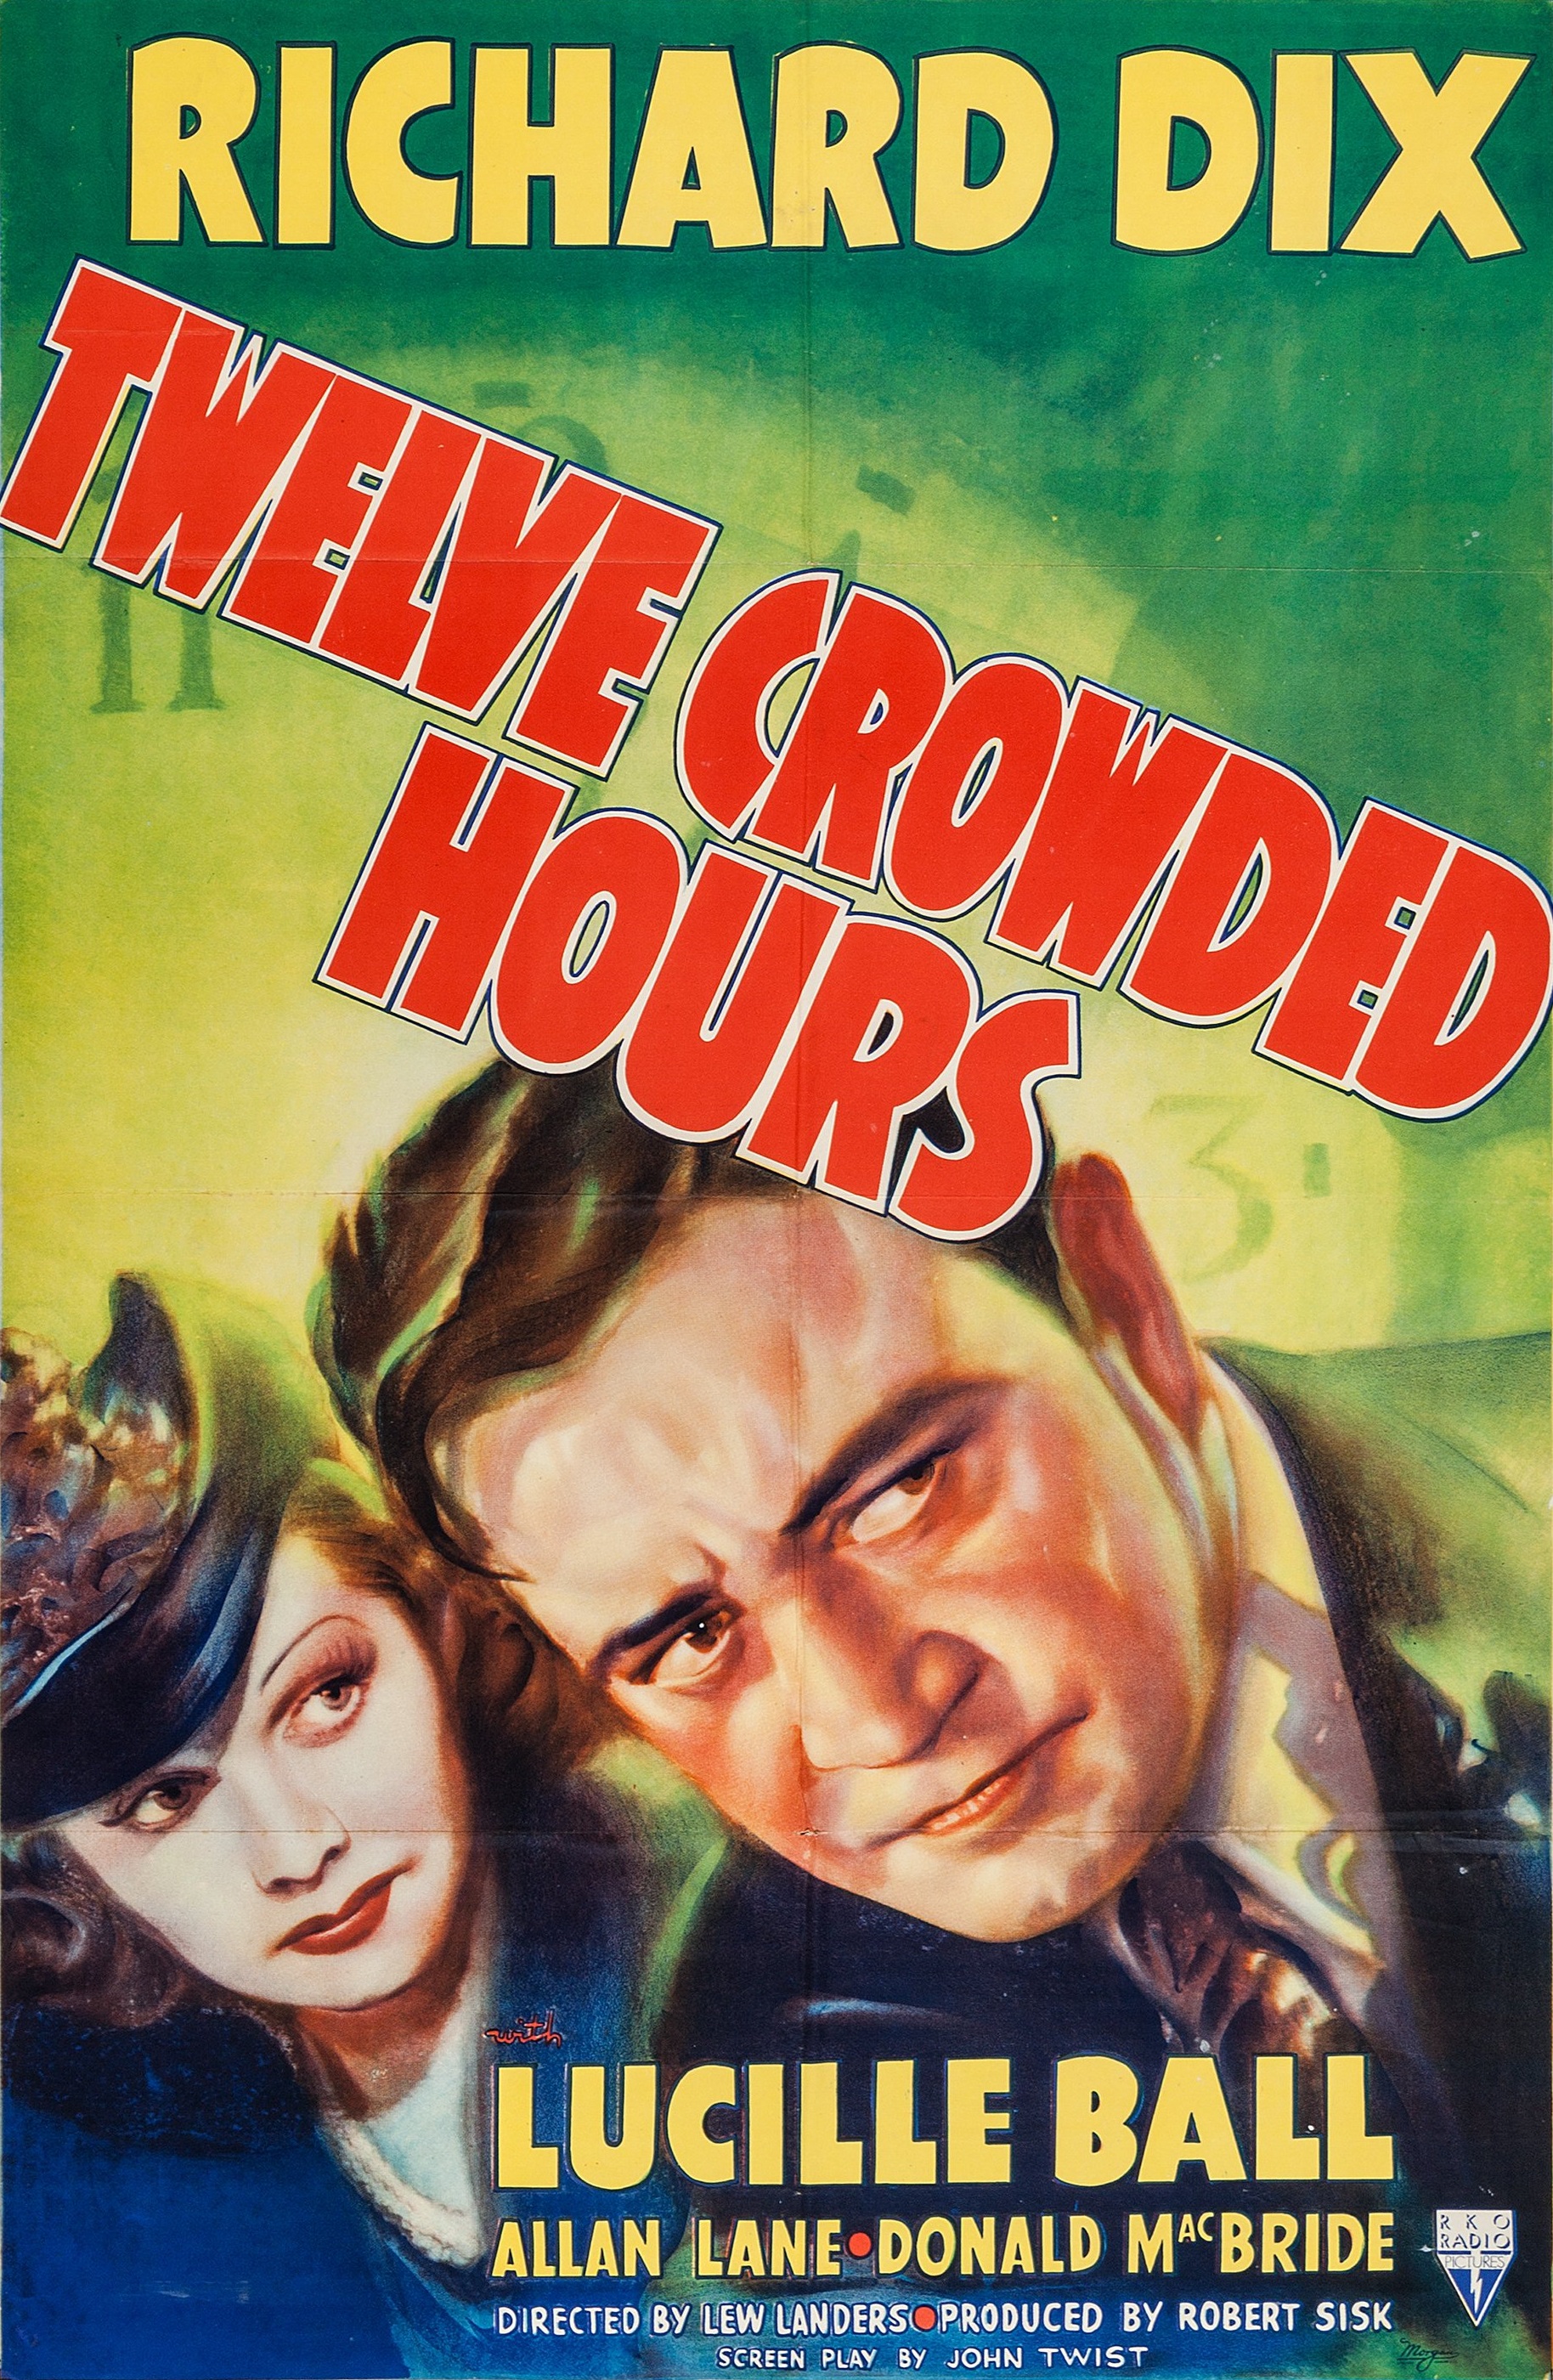 TWELVE CROWDED HOURS (1939)